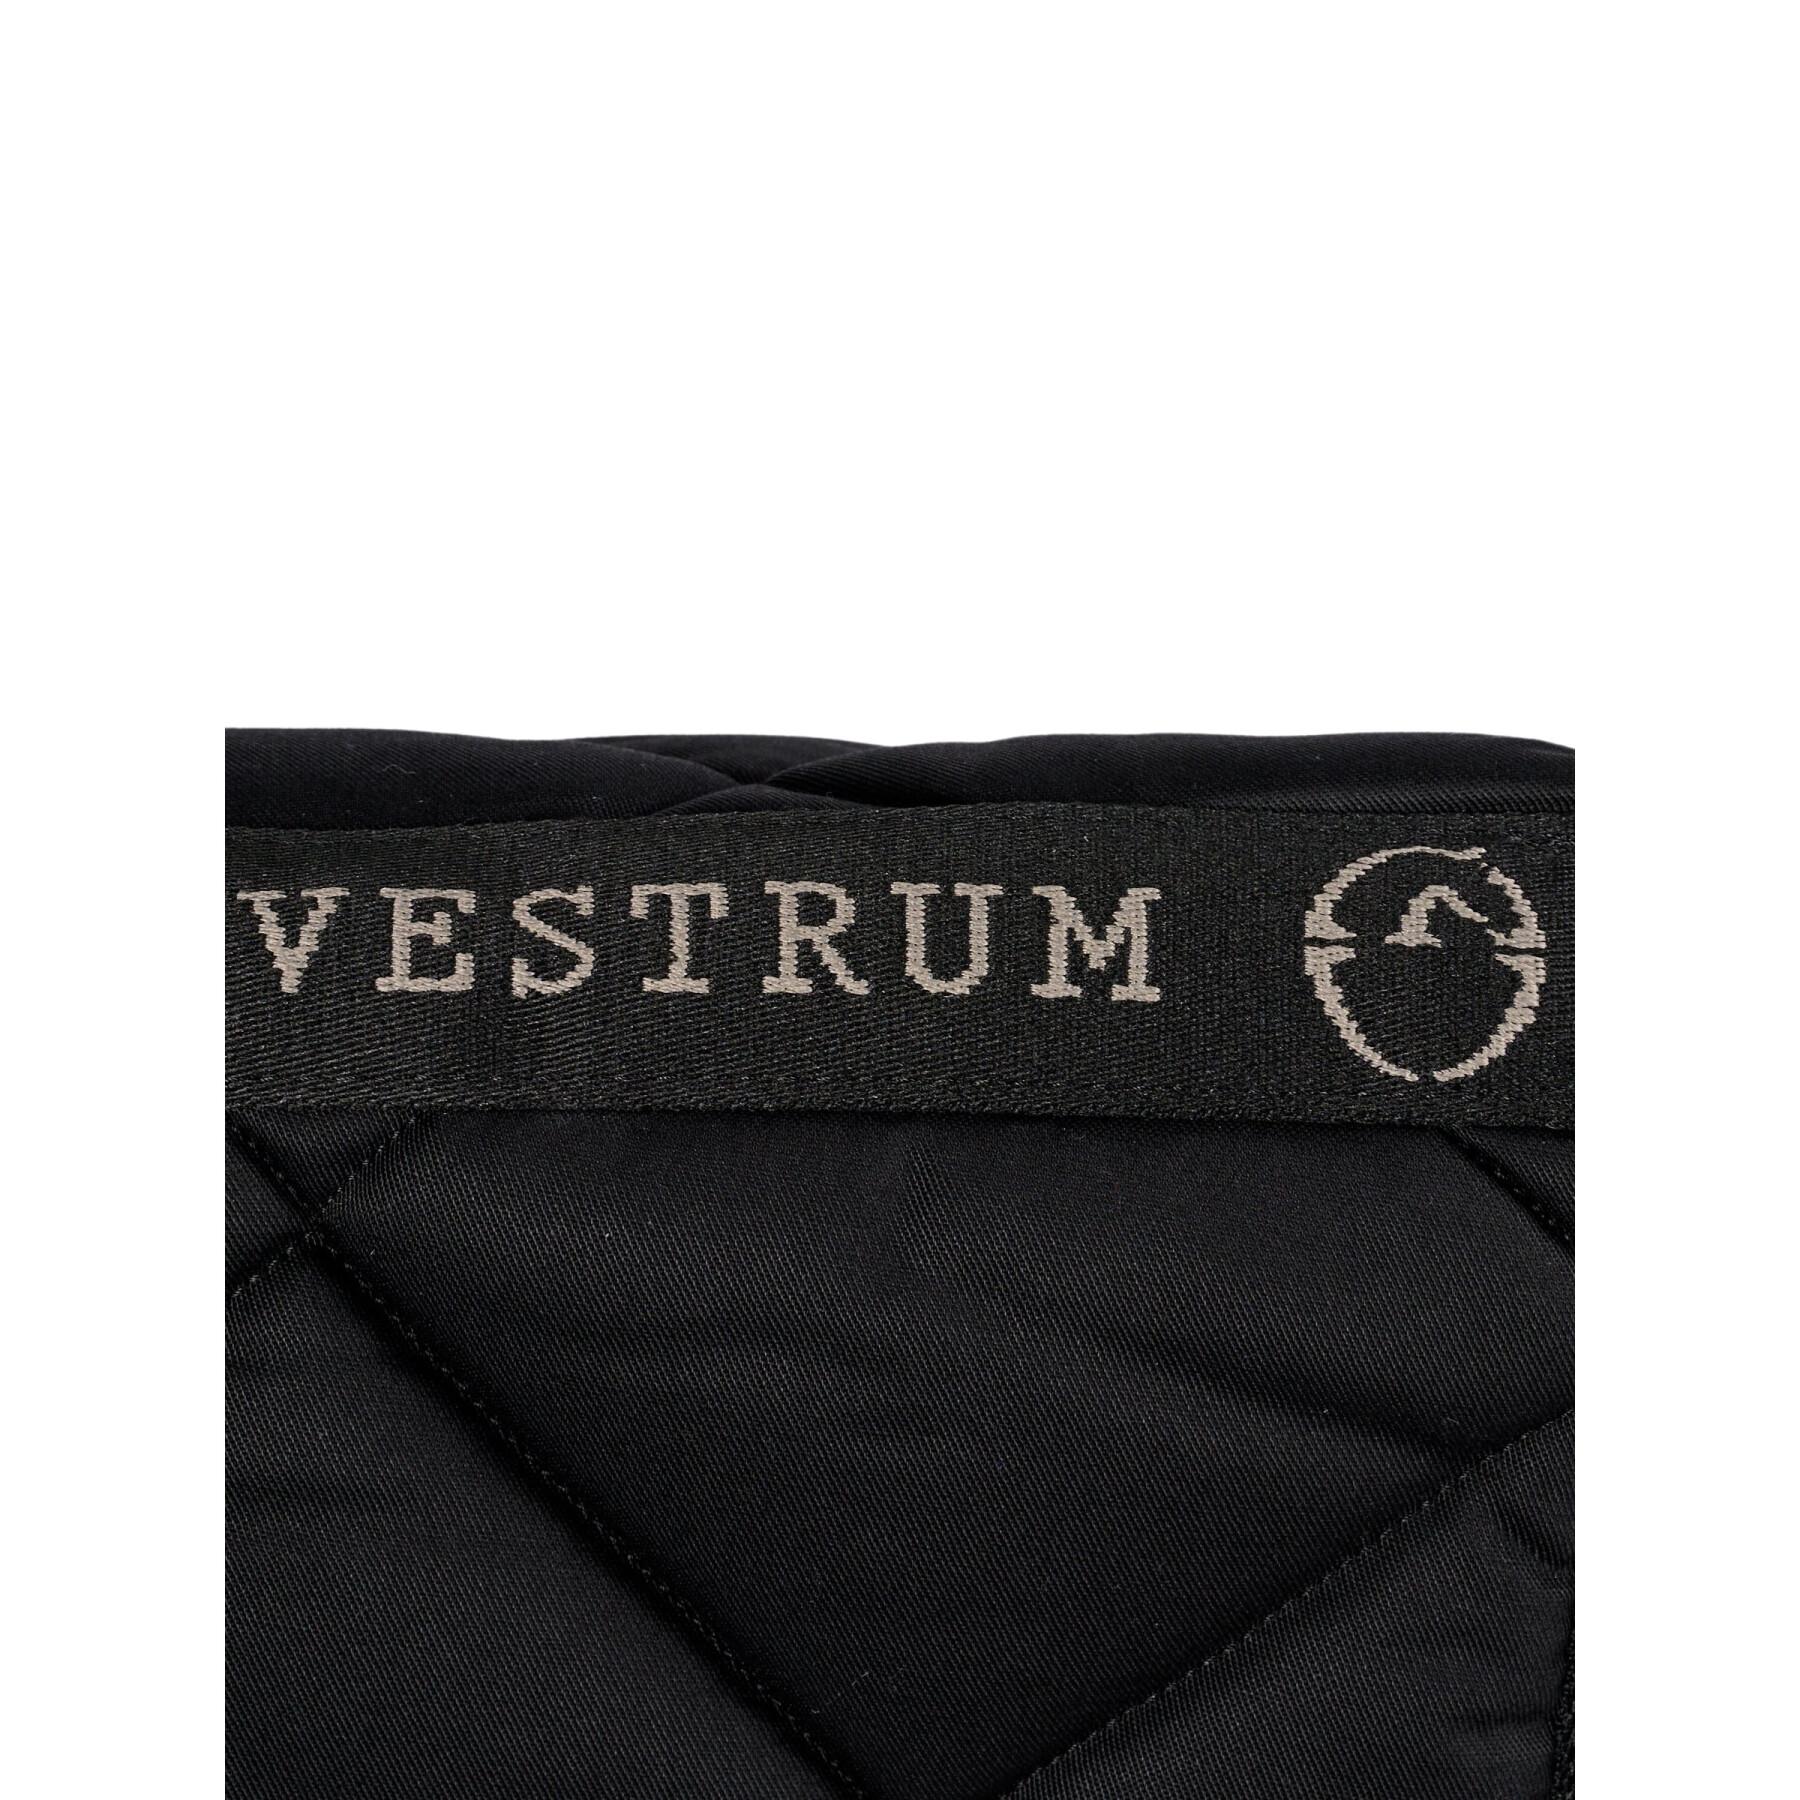 Saddle pad for show jumping Vestrum Bonn